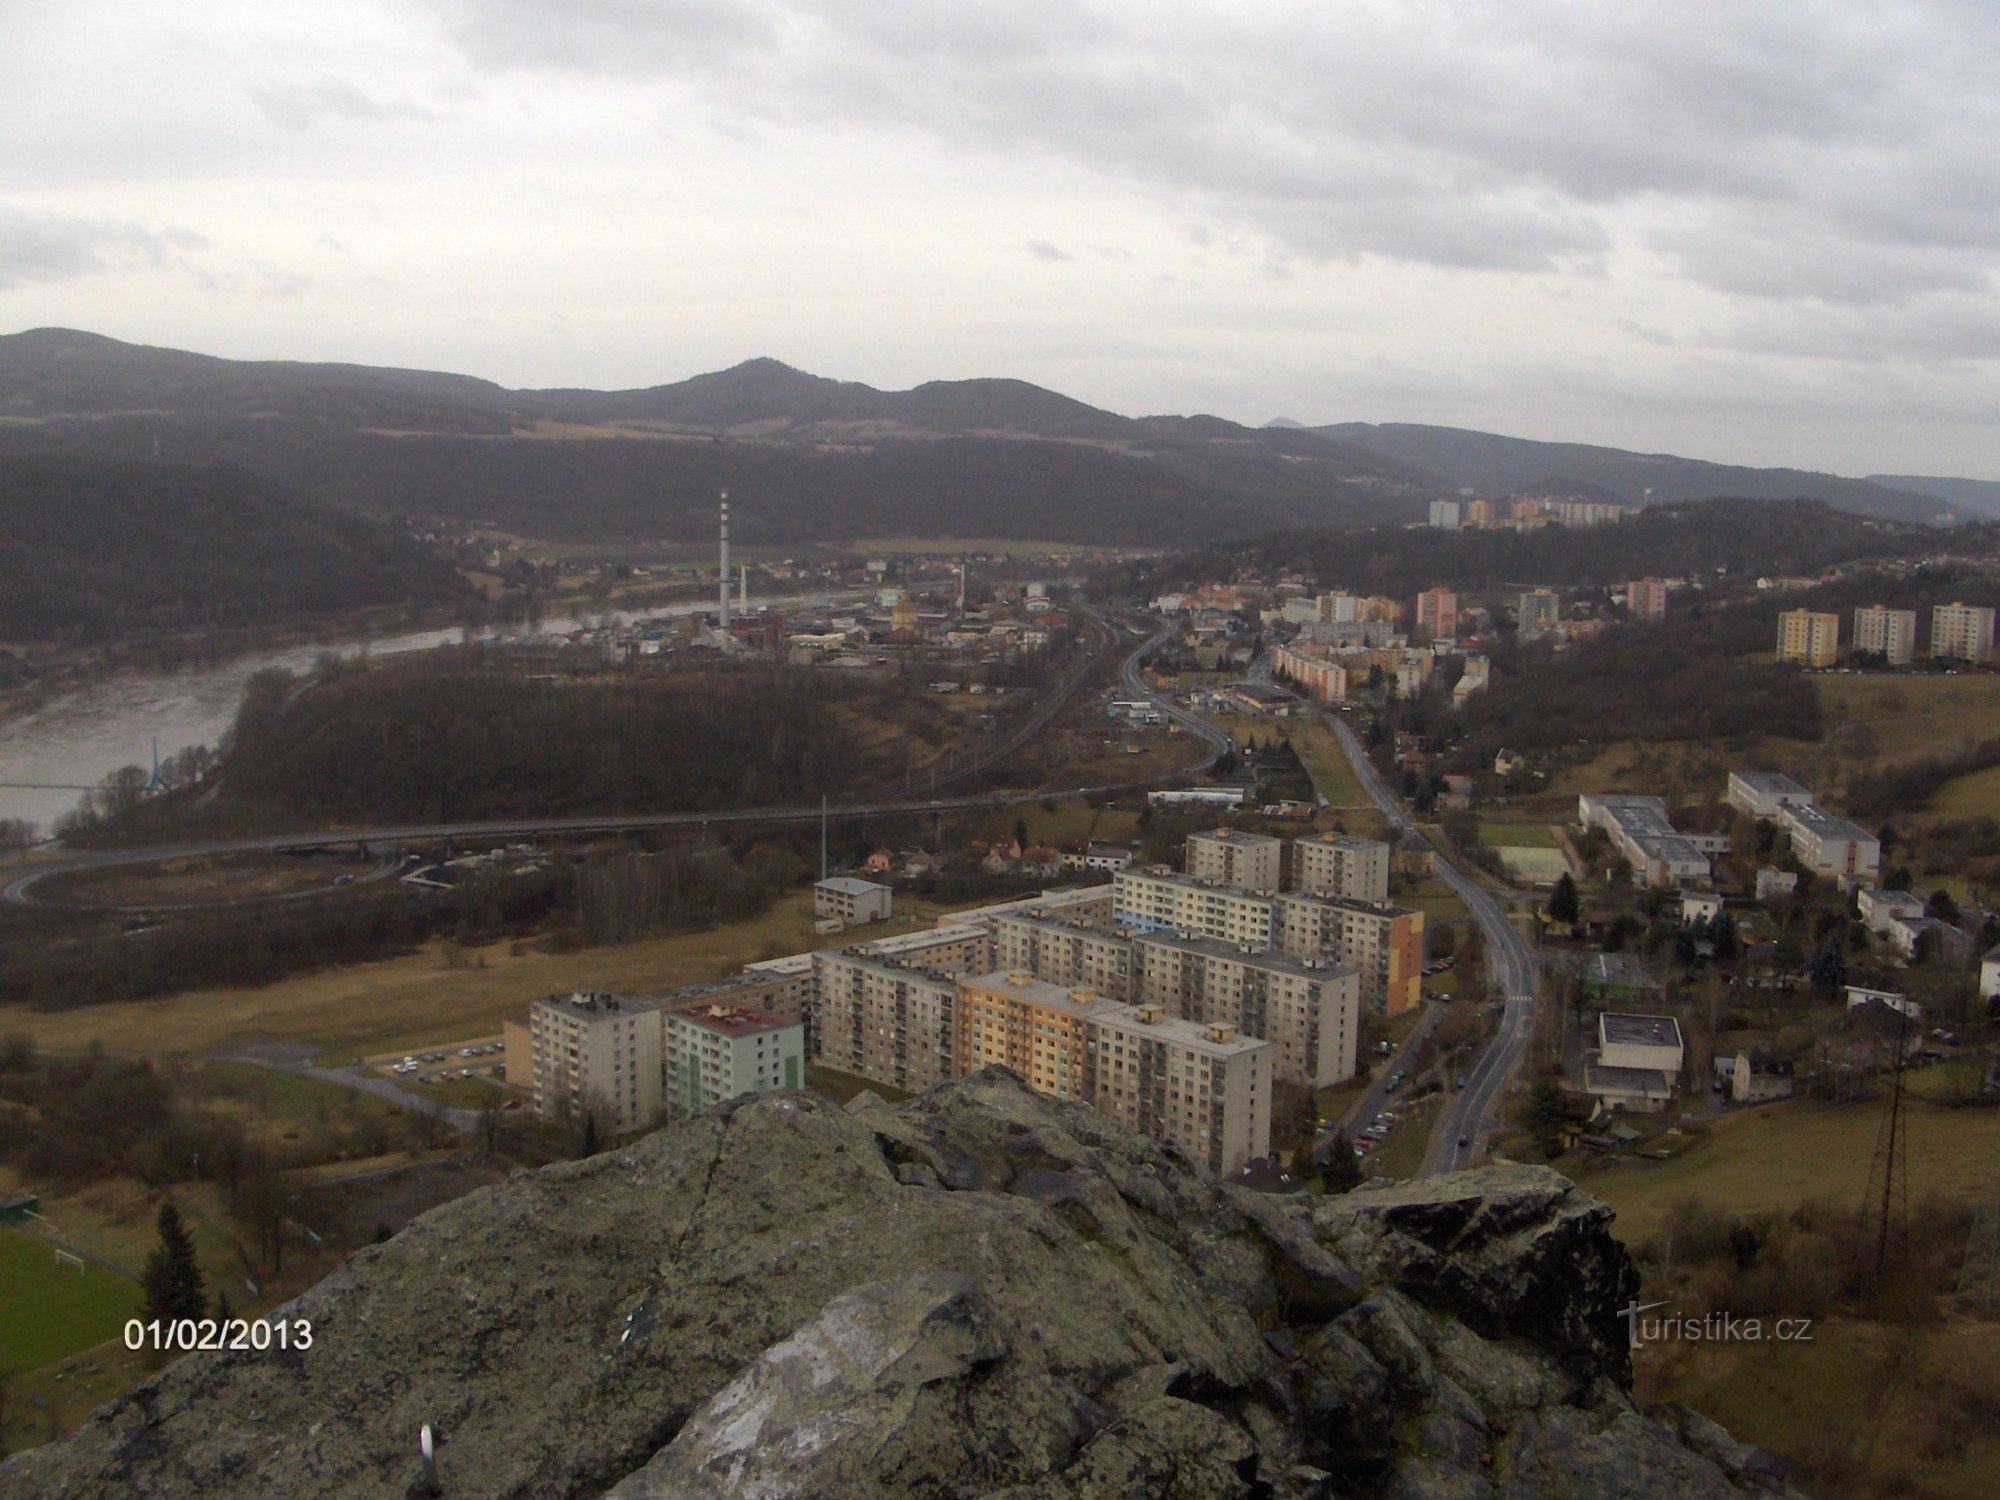 vista das ruínas do castelo de Strážný